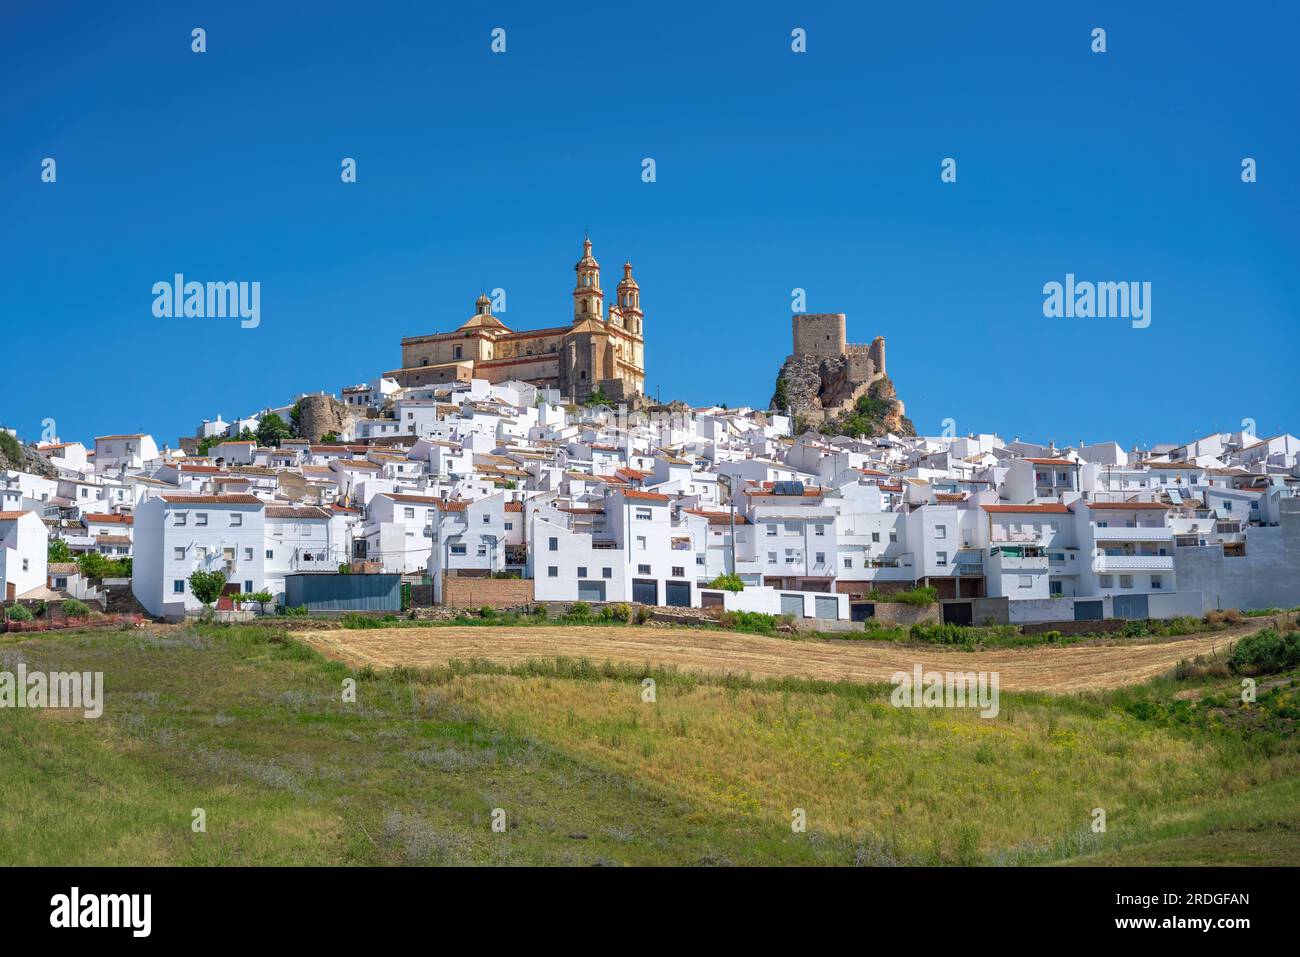 Olvera Skyline with Castle and Church of Nuestra Senora de la Encarnacion - Olvera, Andalusia, Spain Stock Photo